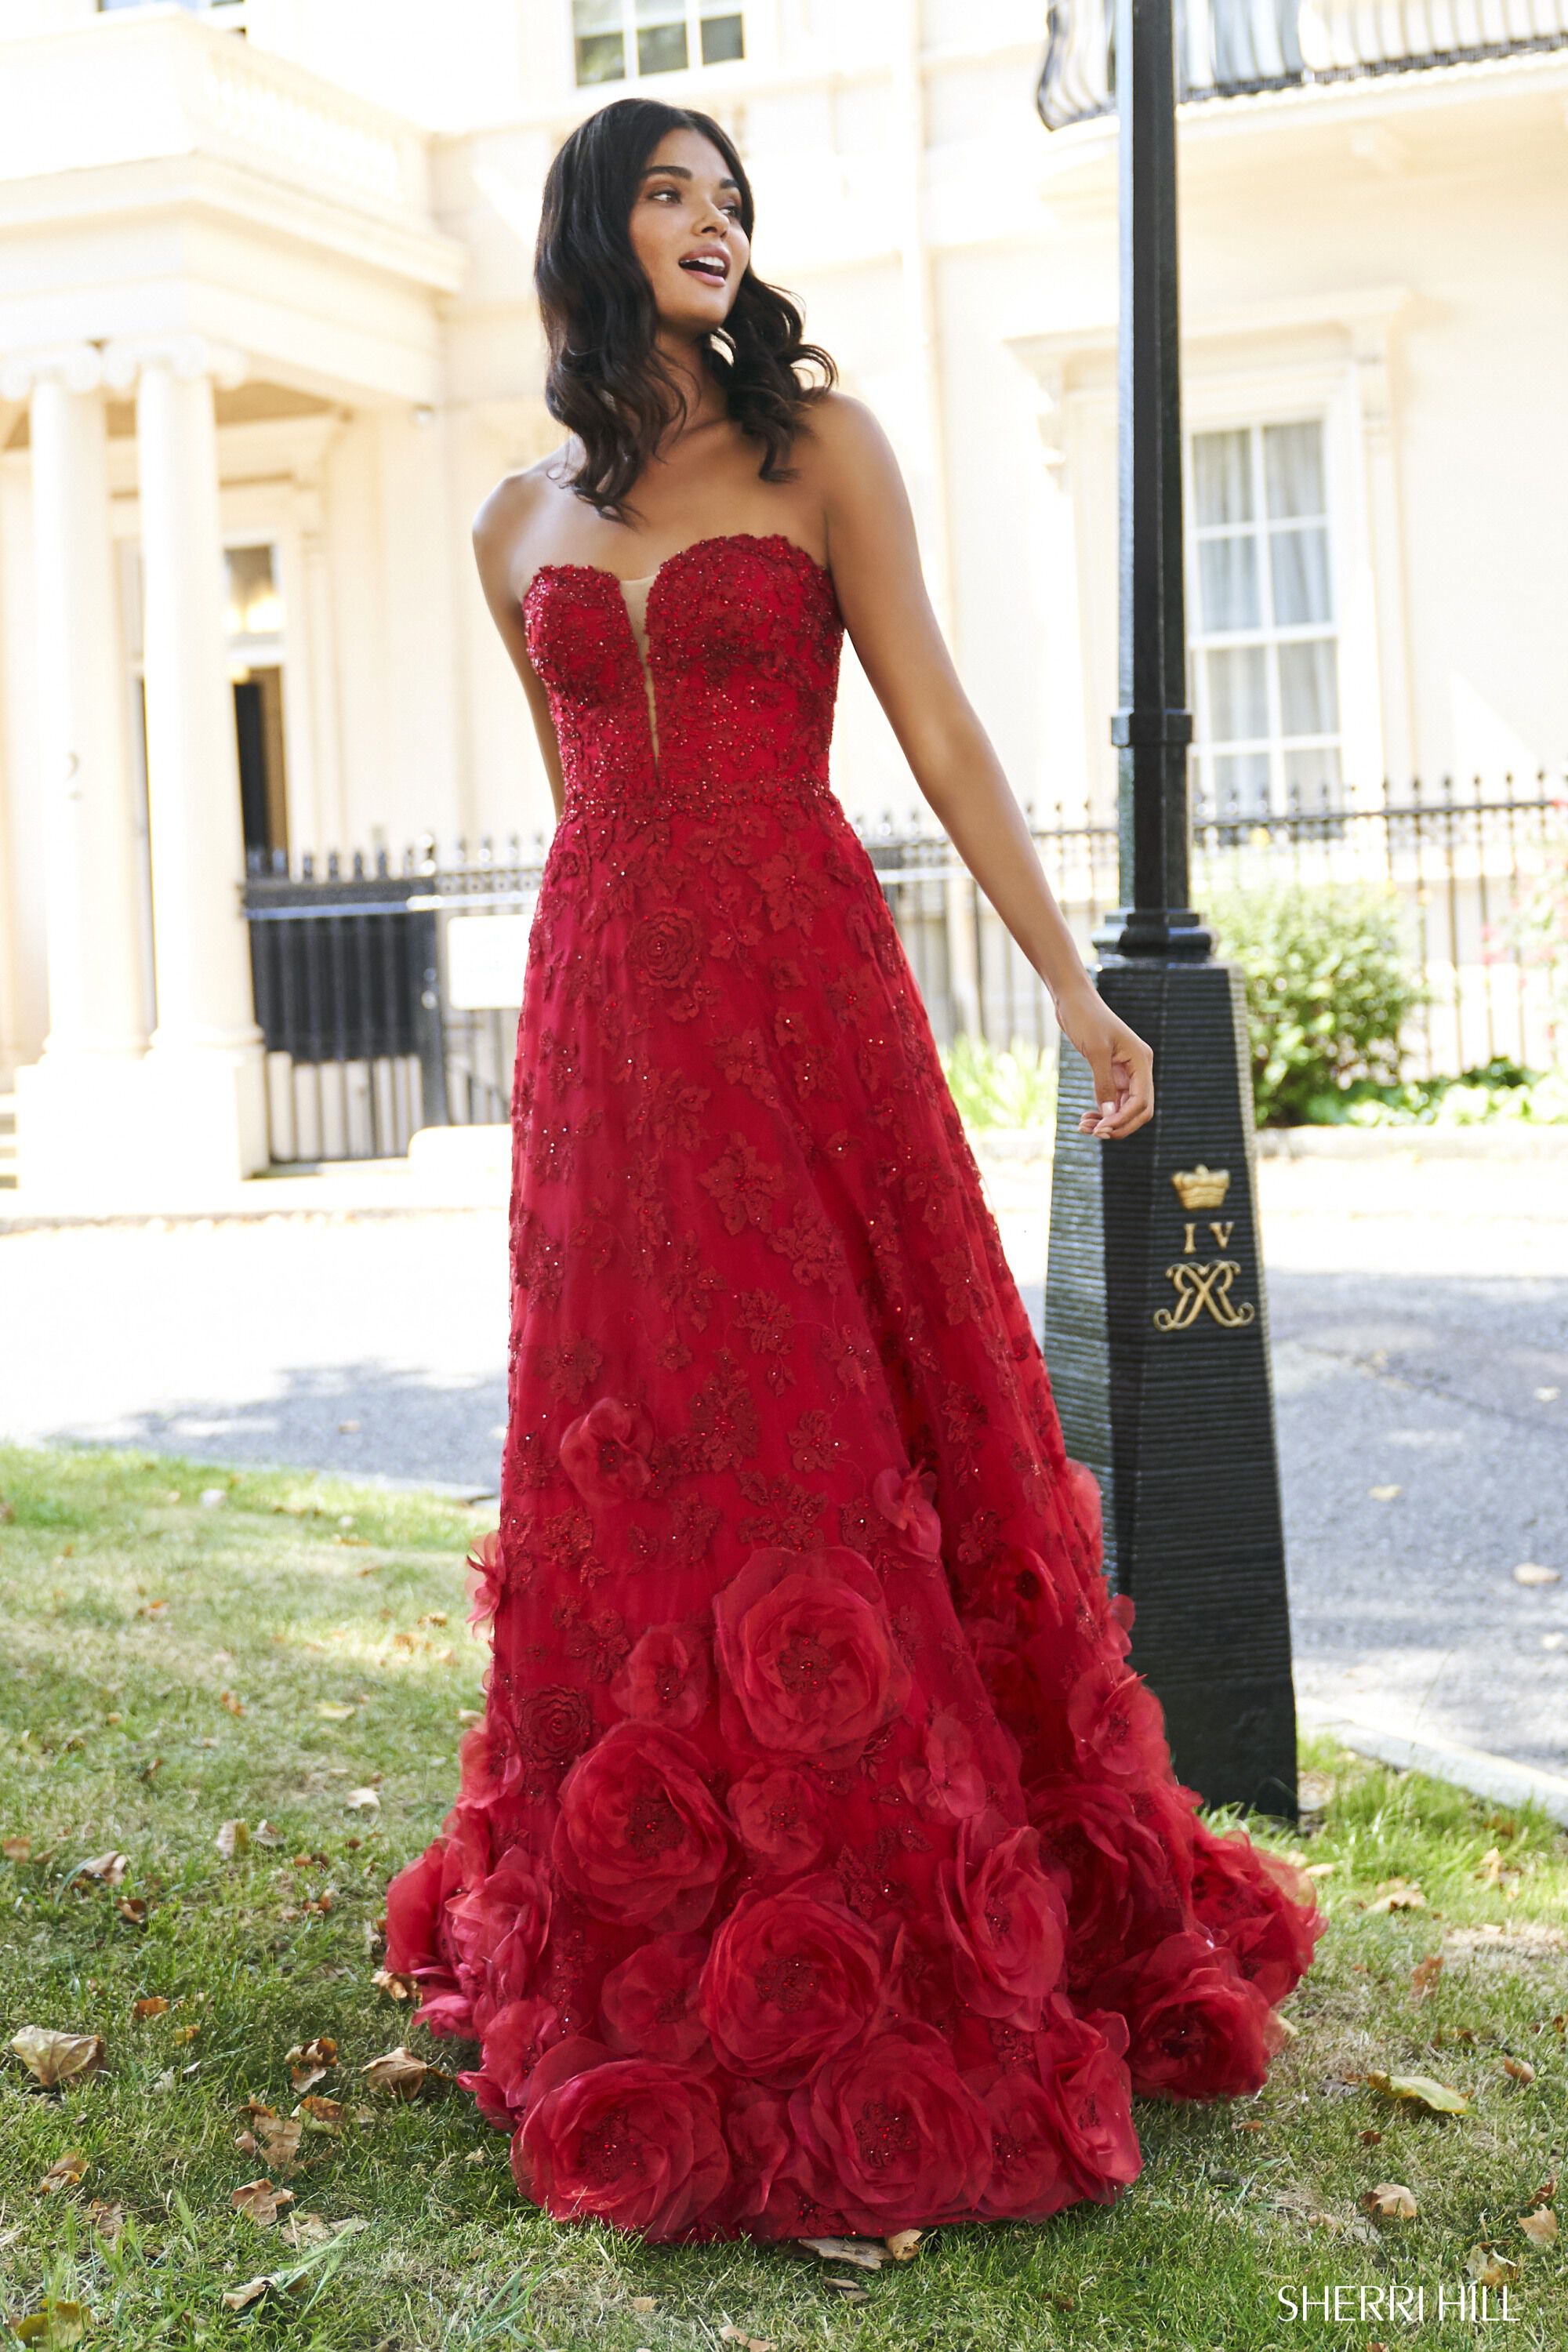 Sherri Hill Red Lace Dress